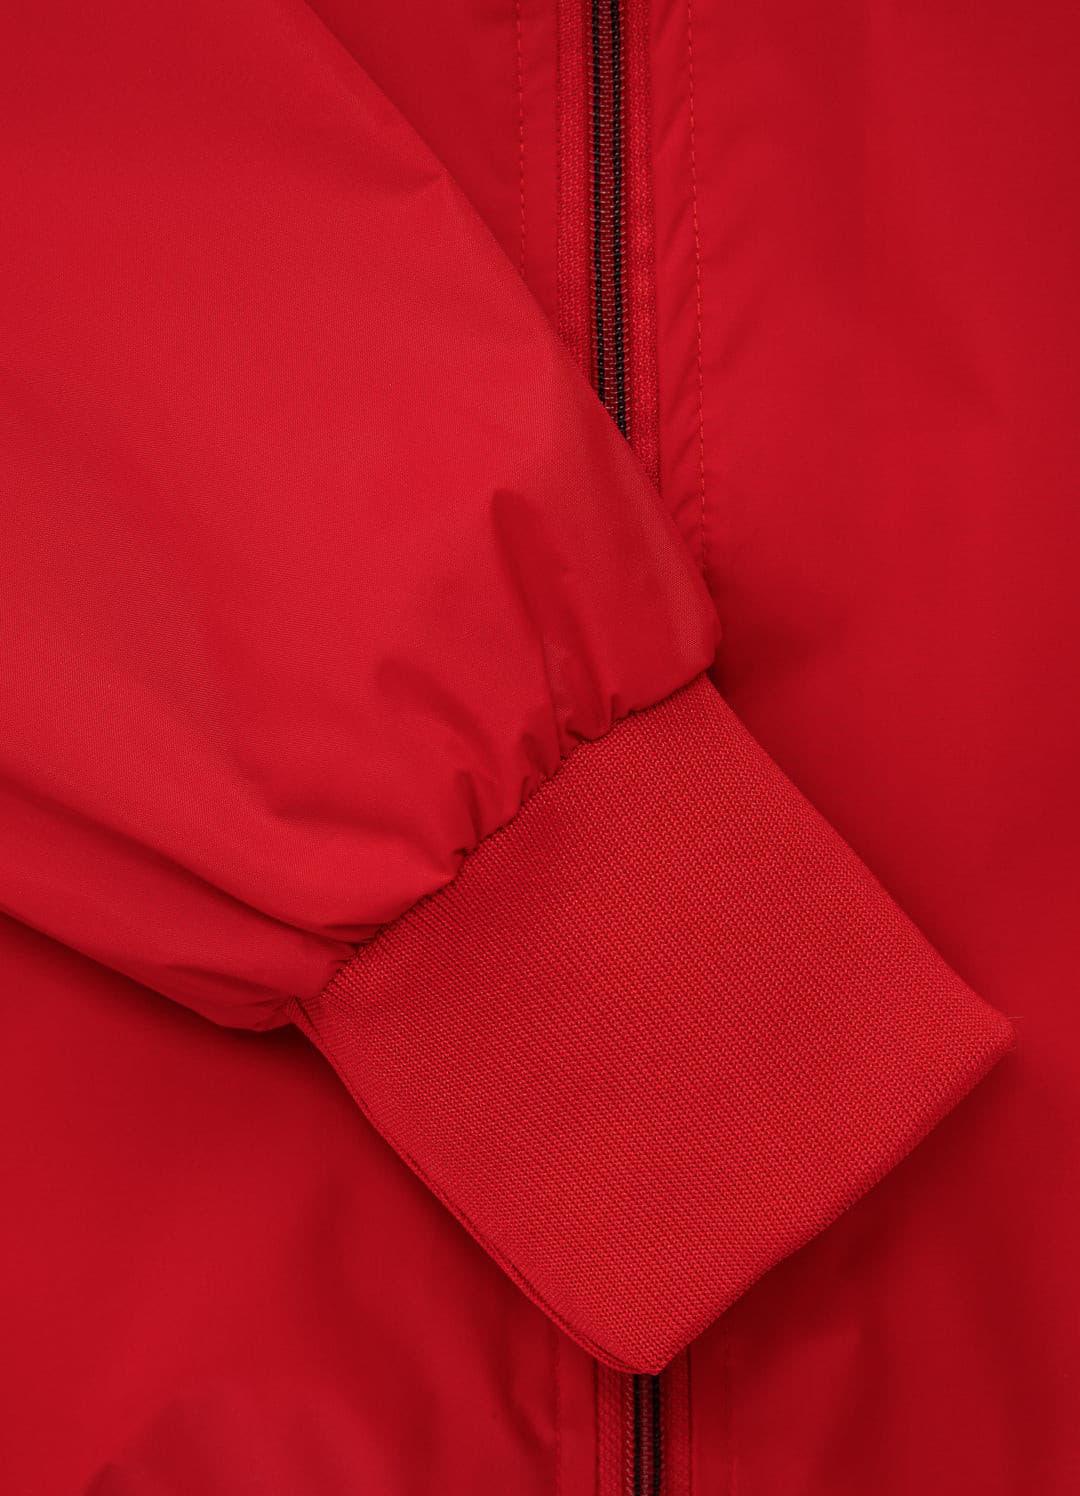 ATHLETIC Sleeve Red Jacket.